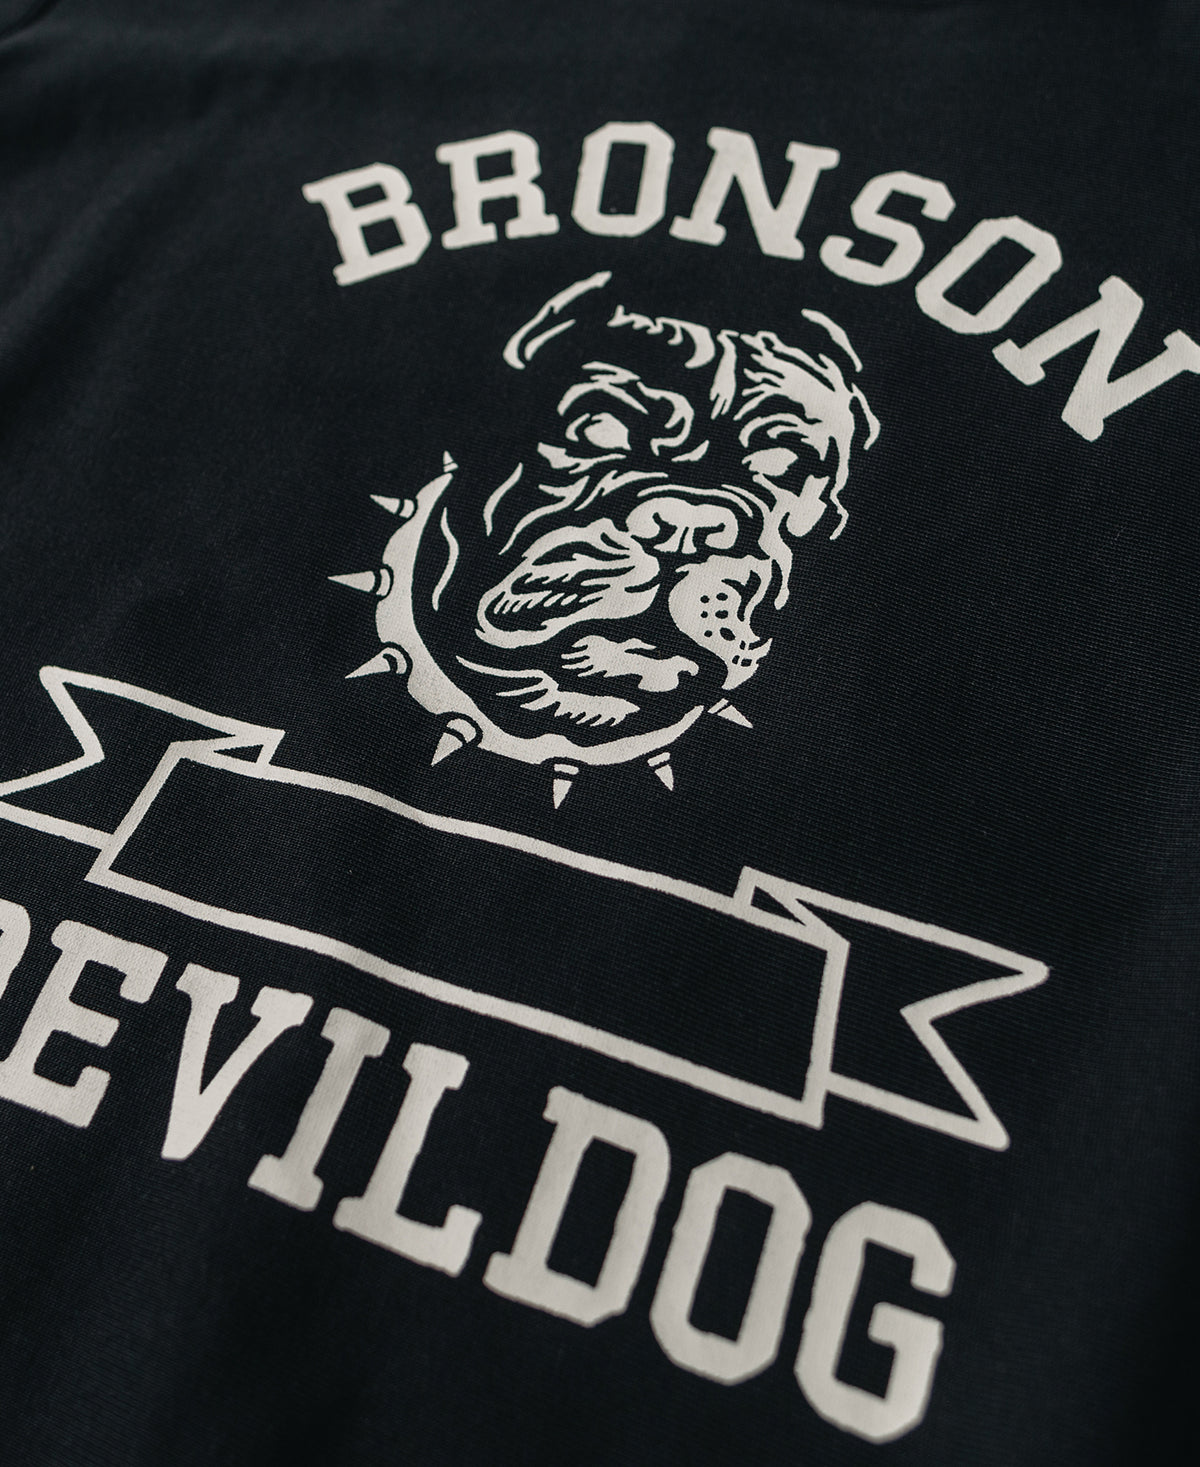 Devil-Dog Logo-Print Reverse Weave T-Shirt - Black